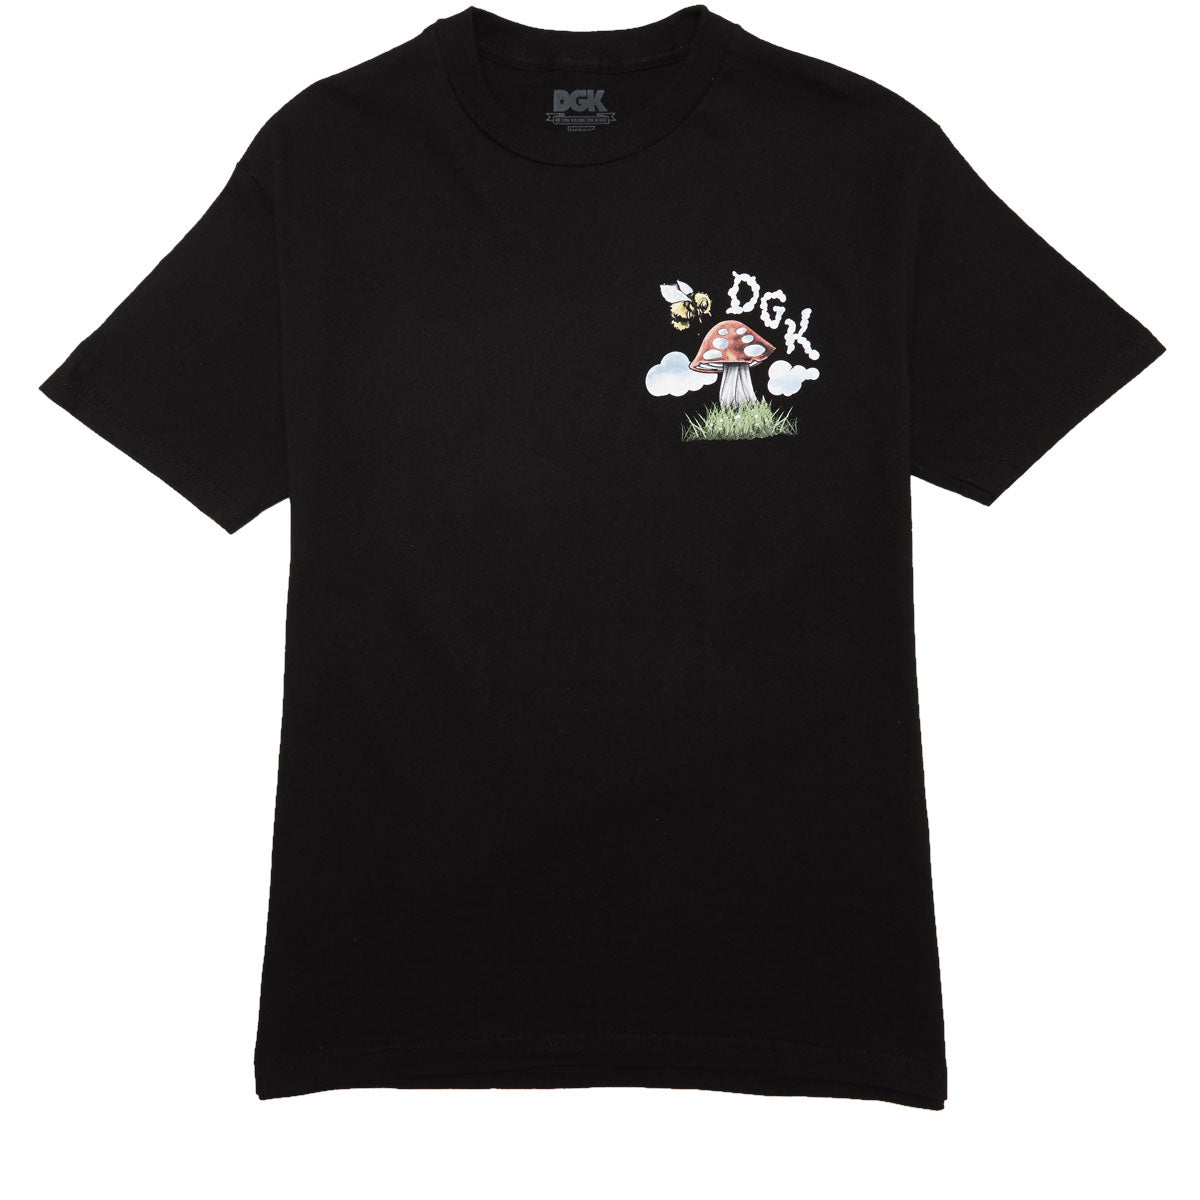 DGK Trippy Math T-Shirt - Black image 2